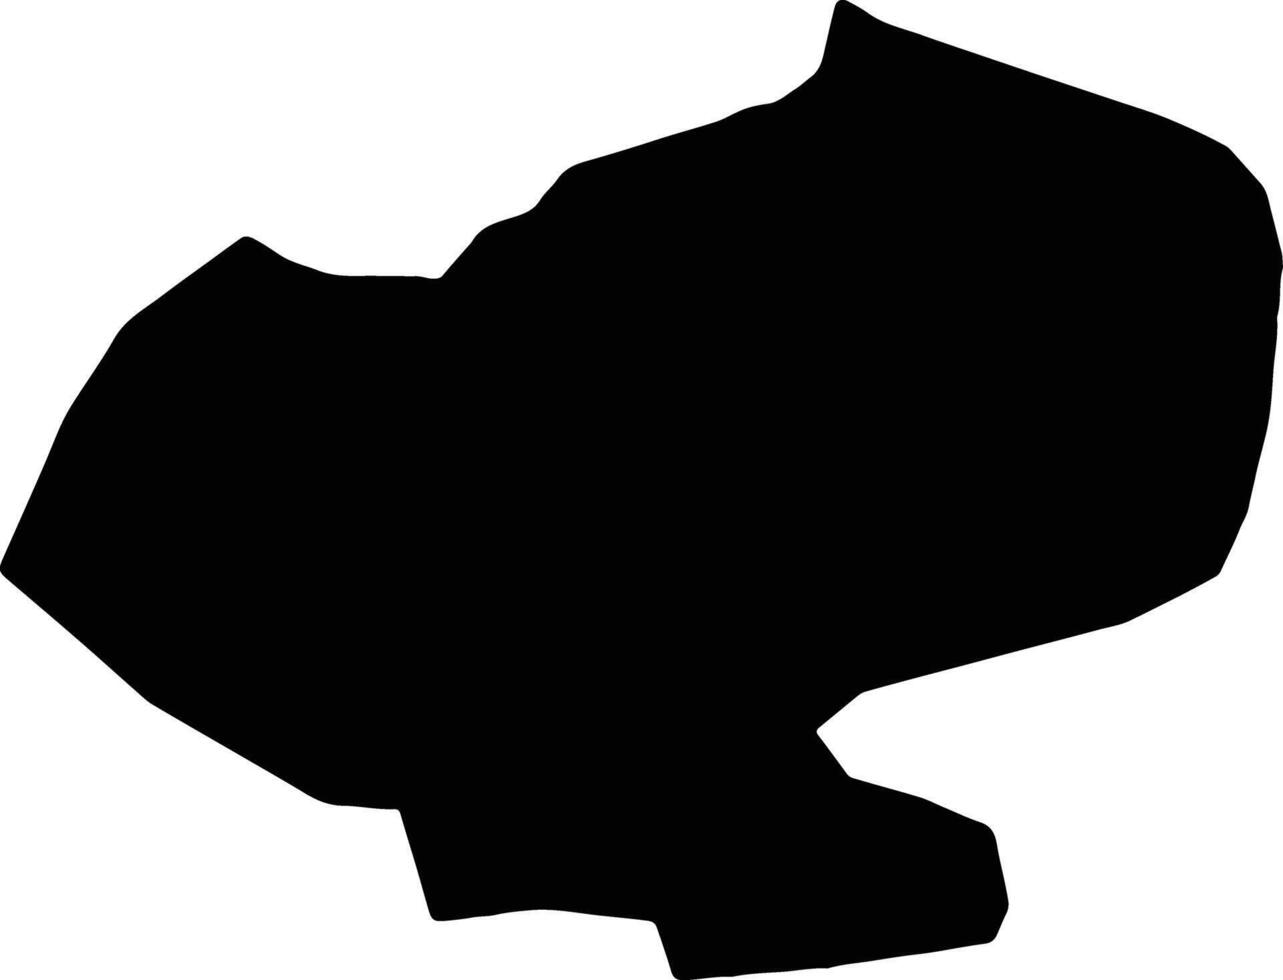 Vilakas Latvia silhouette map vector